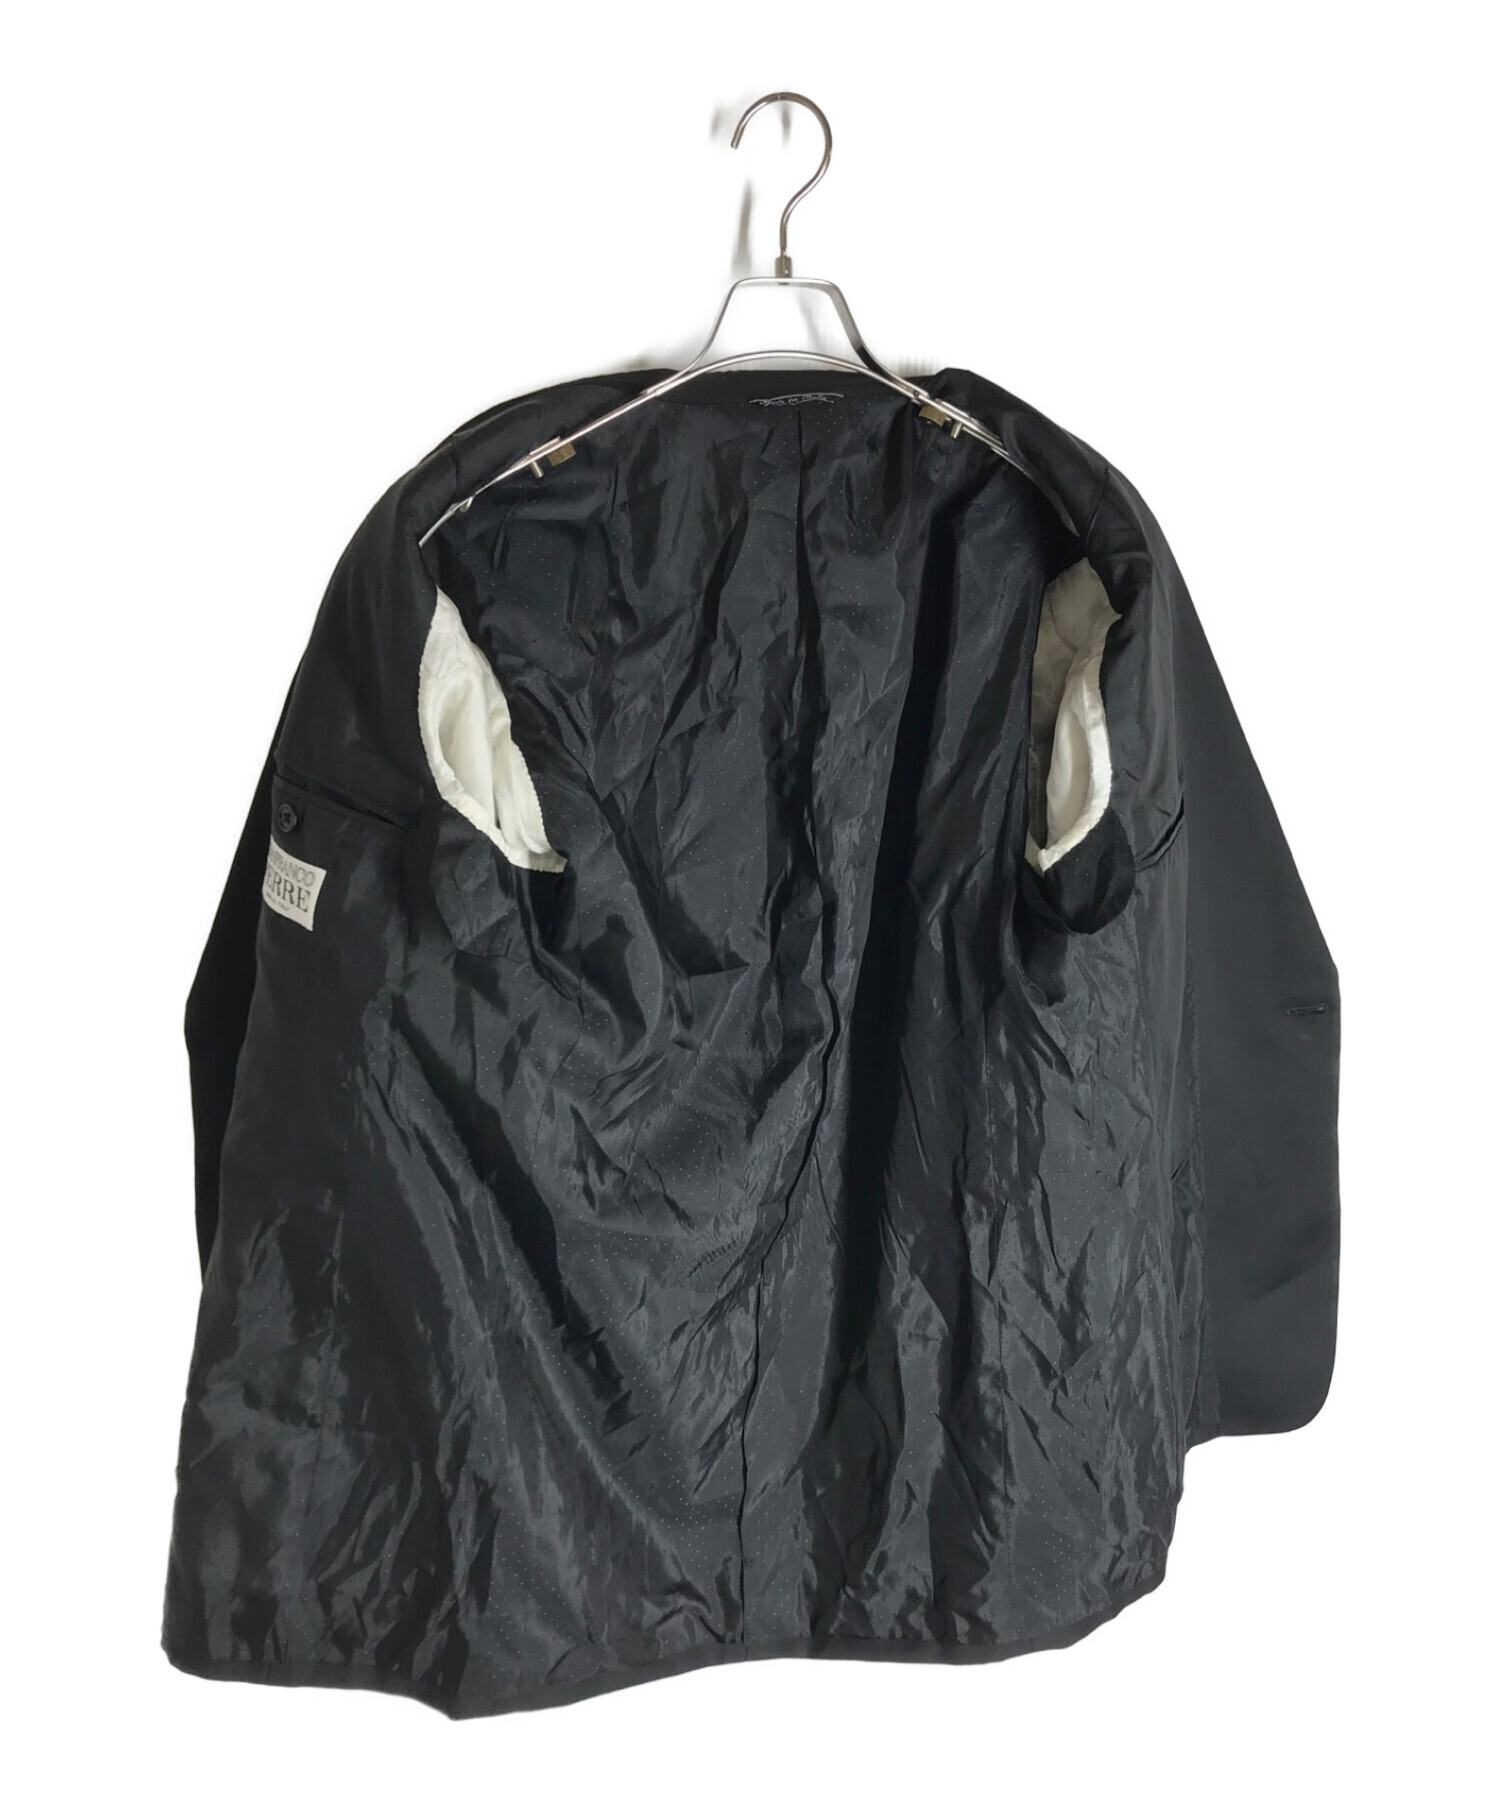 GIANFRANCO FERRE (ジャンフランコフェレ) セットアップスーツ ブラック サイズ:M